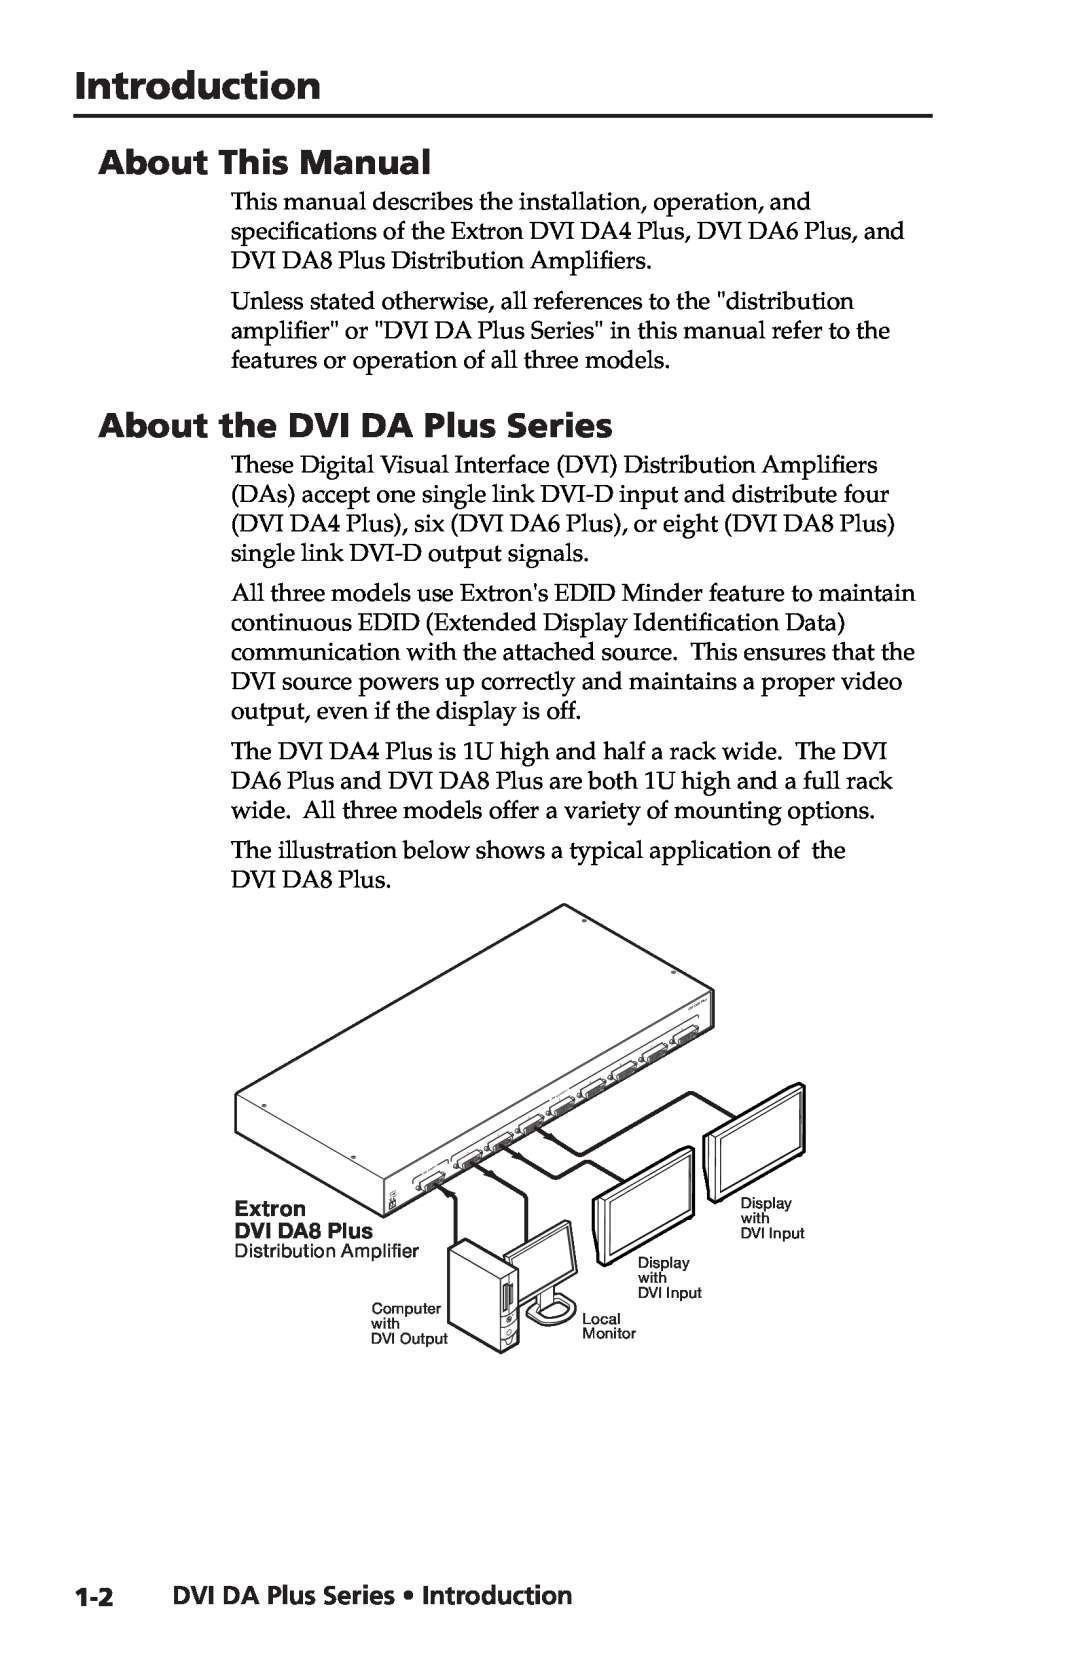 Extron electronic DVI DA6 Plus About This Manual, About the DVI DA Plus Series, 1-2DVI DA Plus Series Introduction 